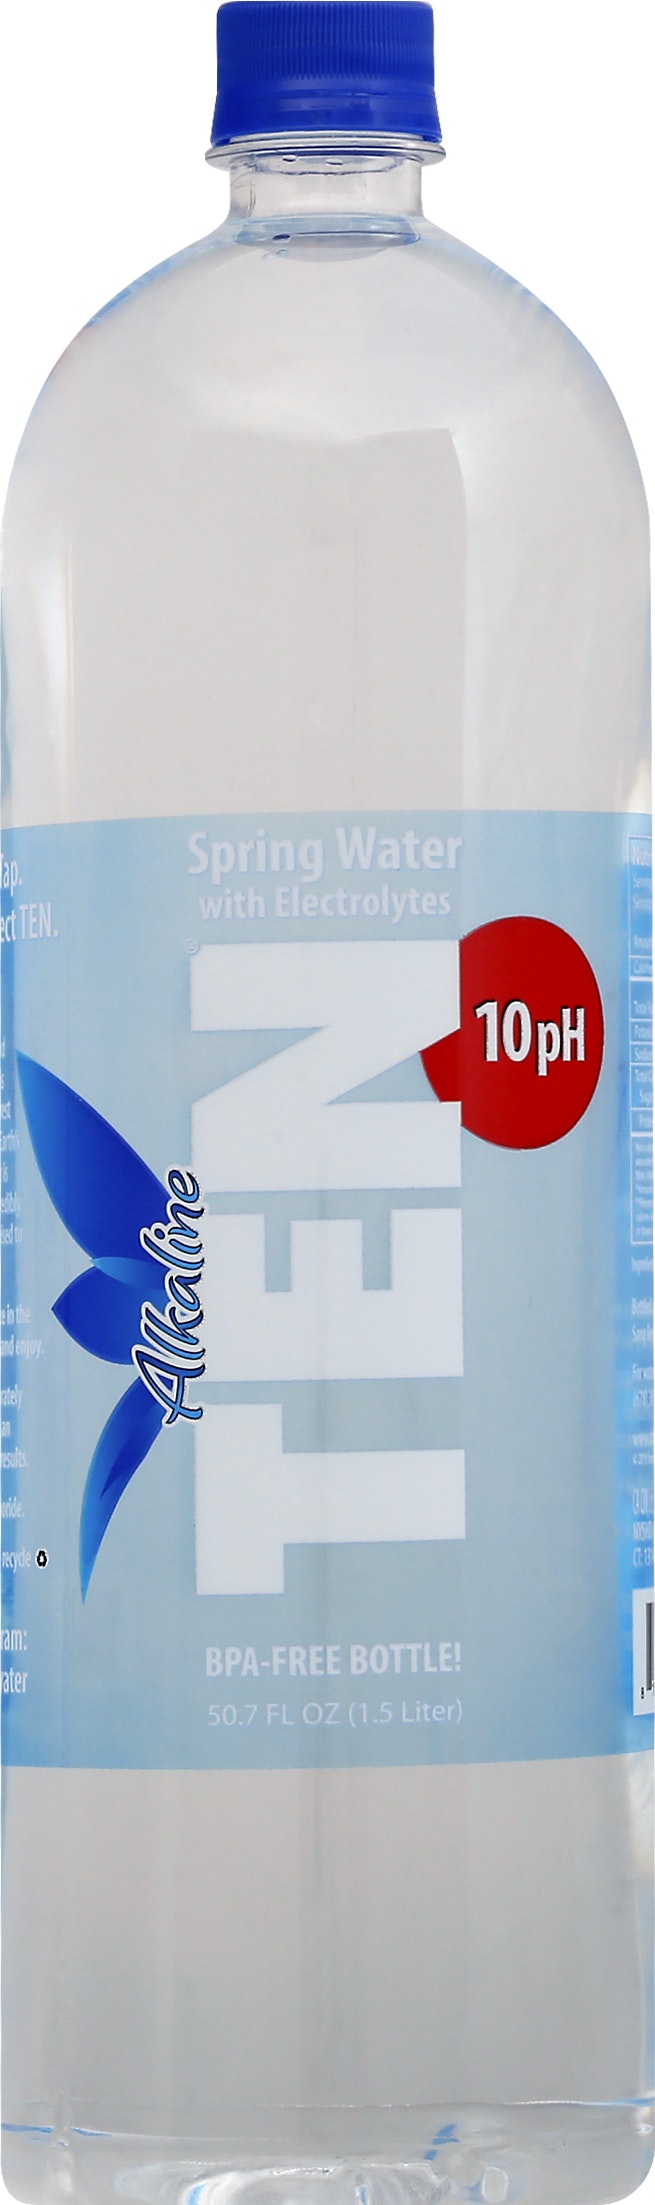 Alkalife Ten Water Spring Alkaline 10Ph 50.7 Fl Oz (Pack of 12)